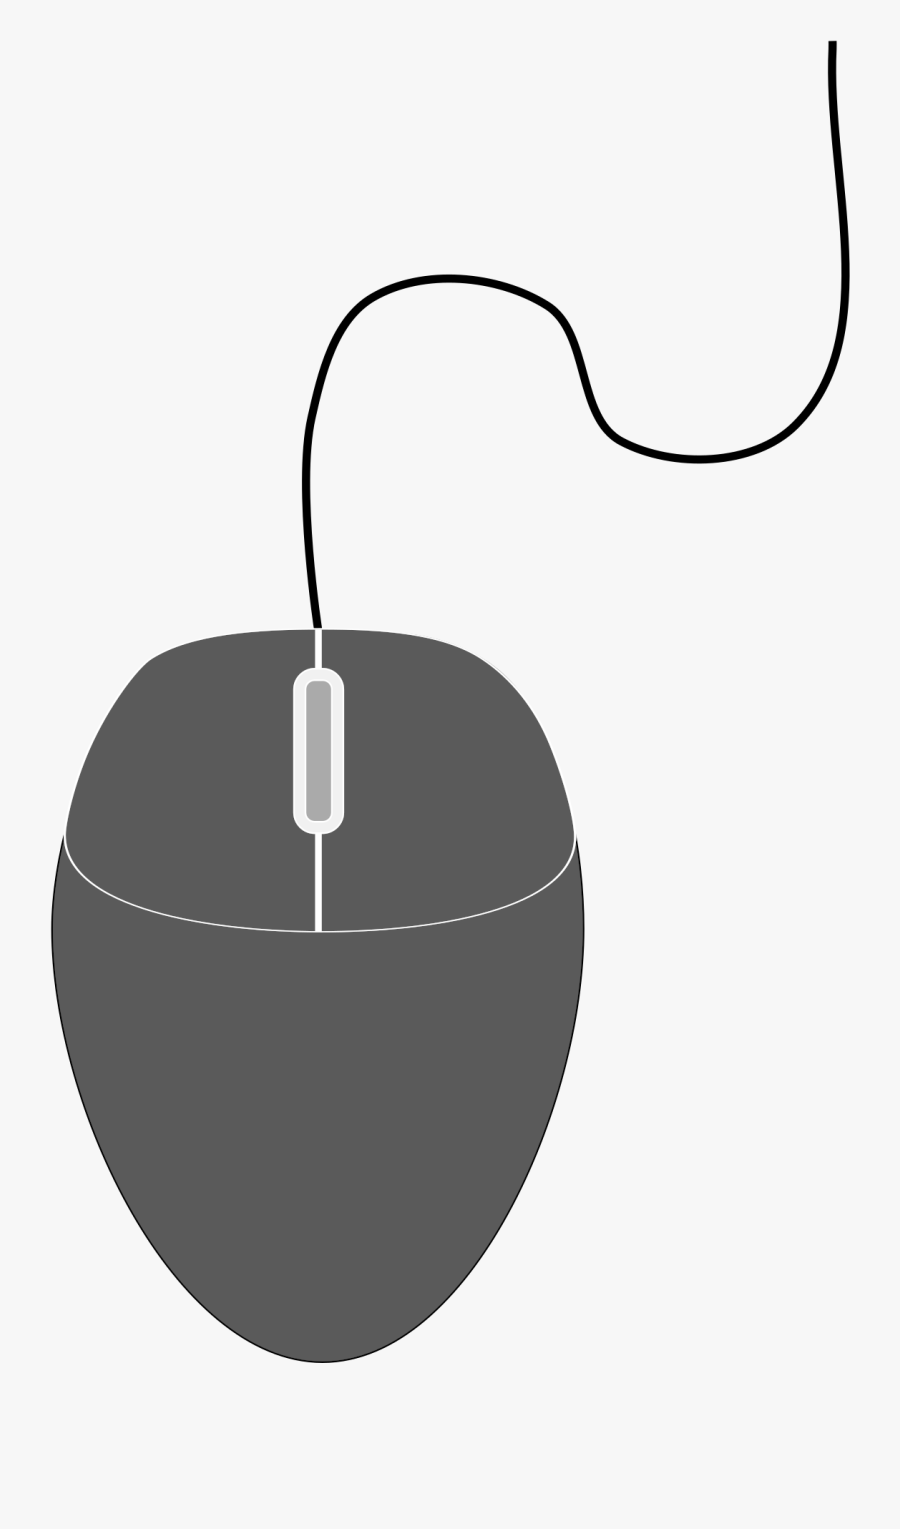 Clipart - Cartoon Computer Mouse Black, Transparent Clipart